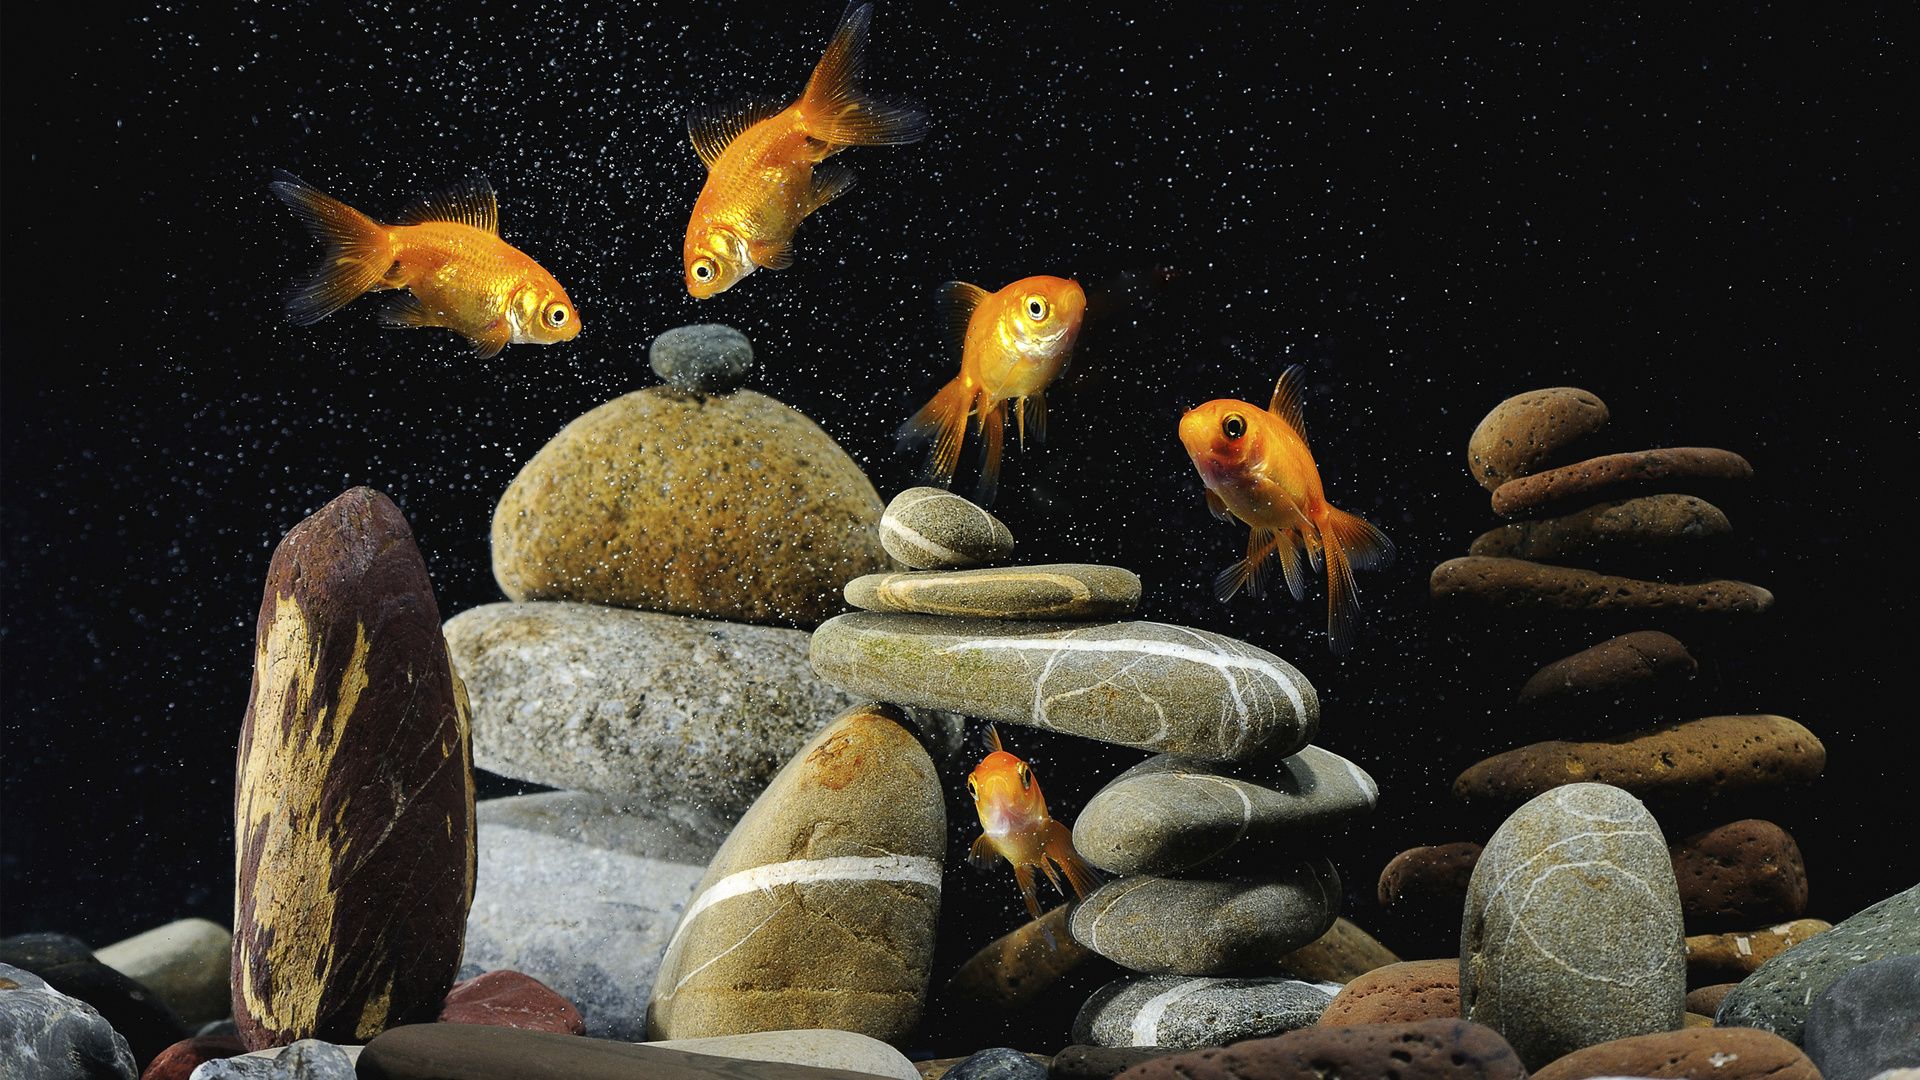 Wallpapers For Desktop Aquarium With Floating Fish